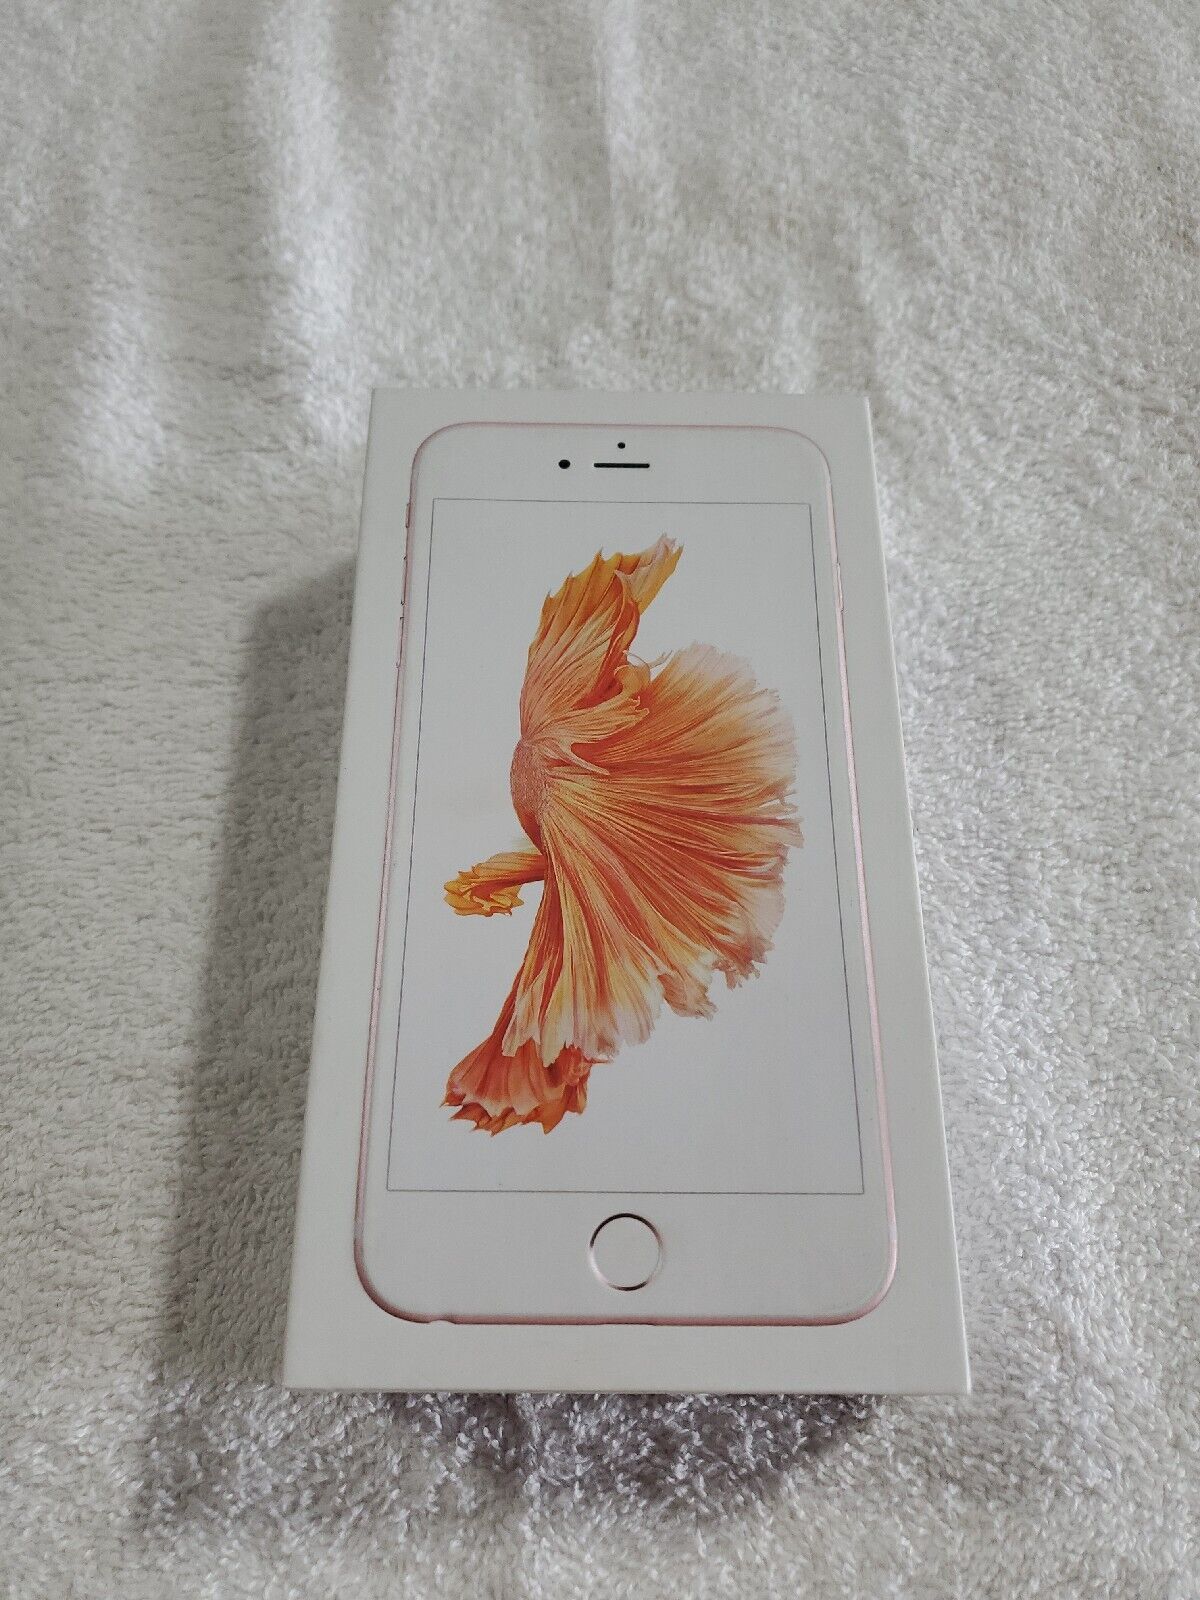 Apple iPhone 6s Plus - 64GB - Rose Gold (Unlocked) A1634 (CDMA 